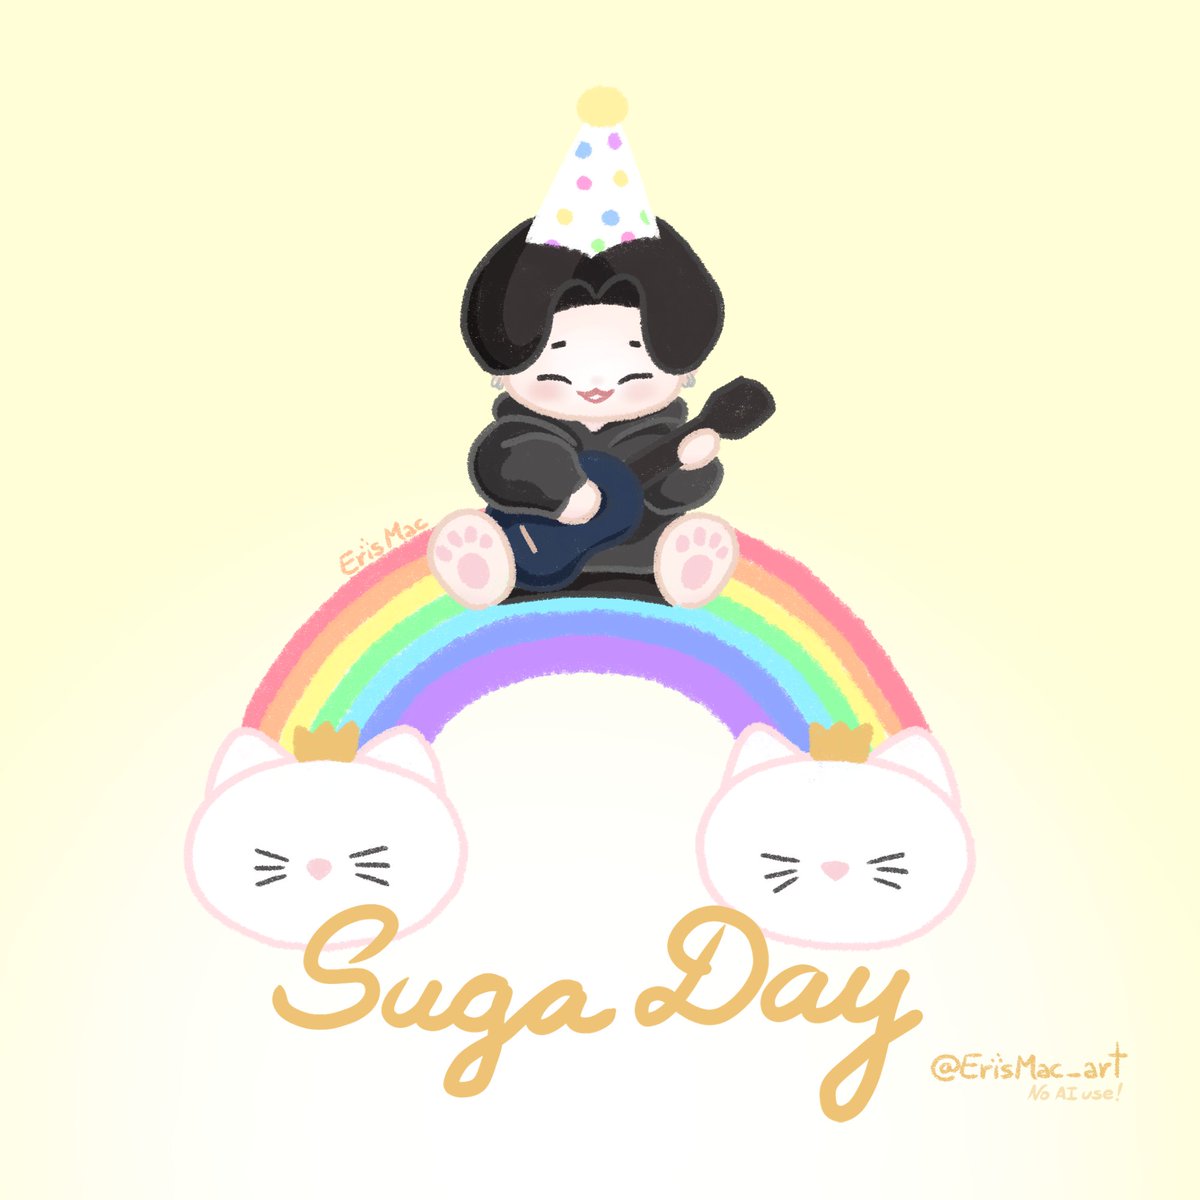 Happy Suga Day
#btsfanart #BTS @bts_t

It's Suga hyung!
#Yoongi #Suga #HAPPYSUGADAY 
#슈가형이야 #방탄소년단슈가